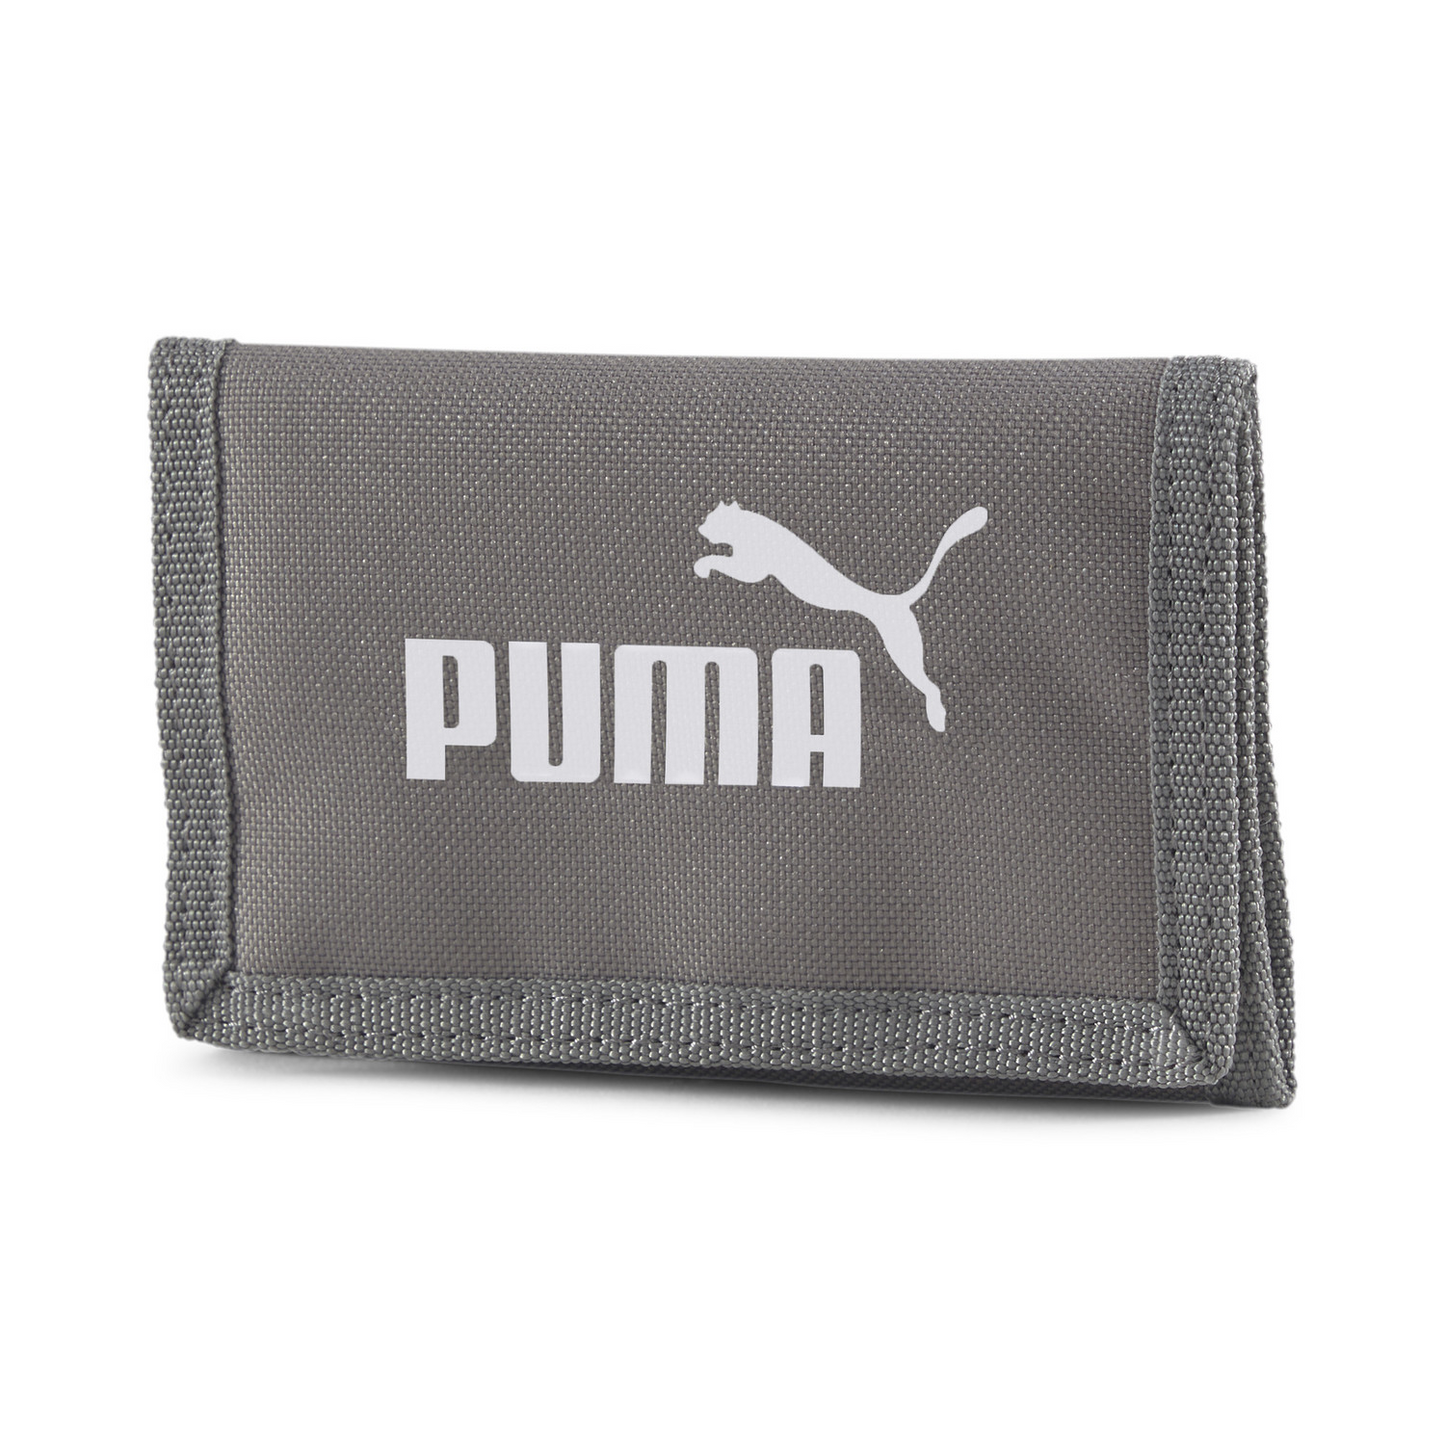 Puma phase wallet-075617 36